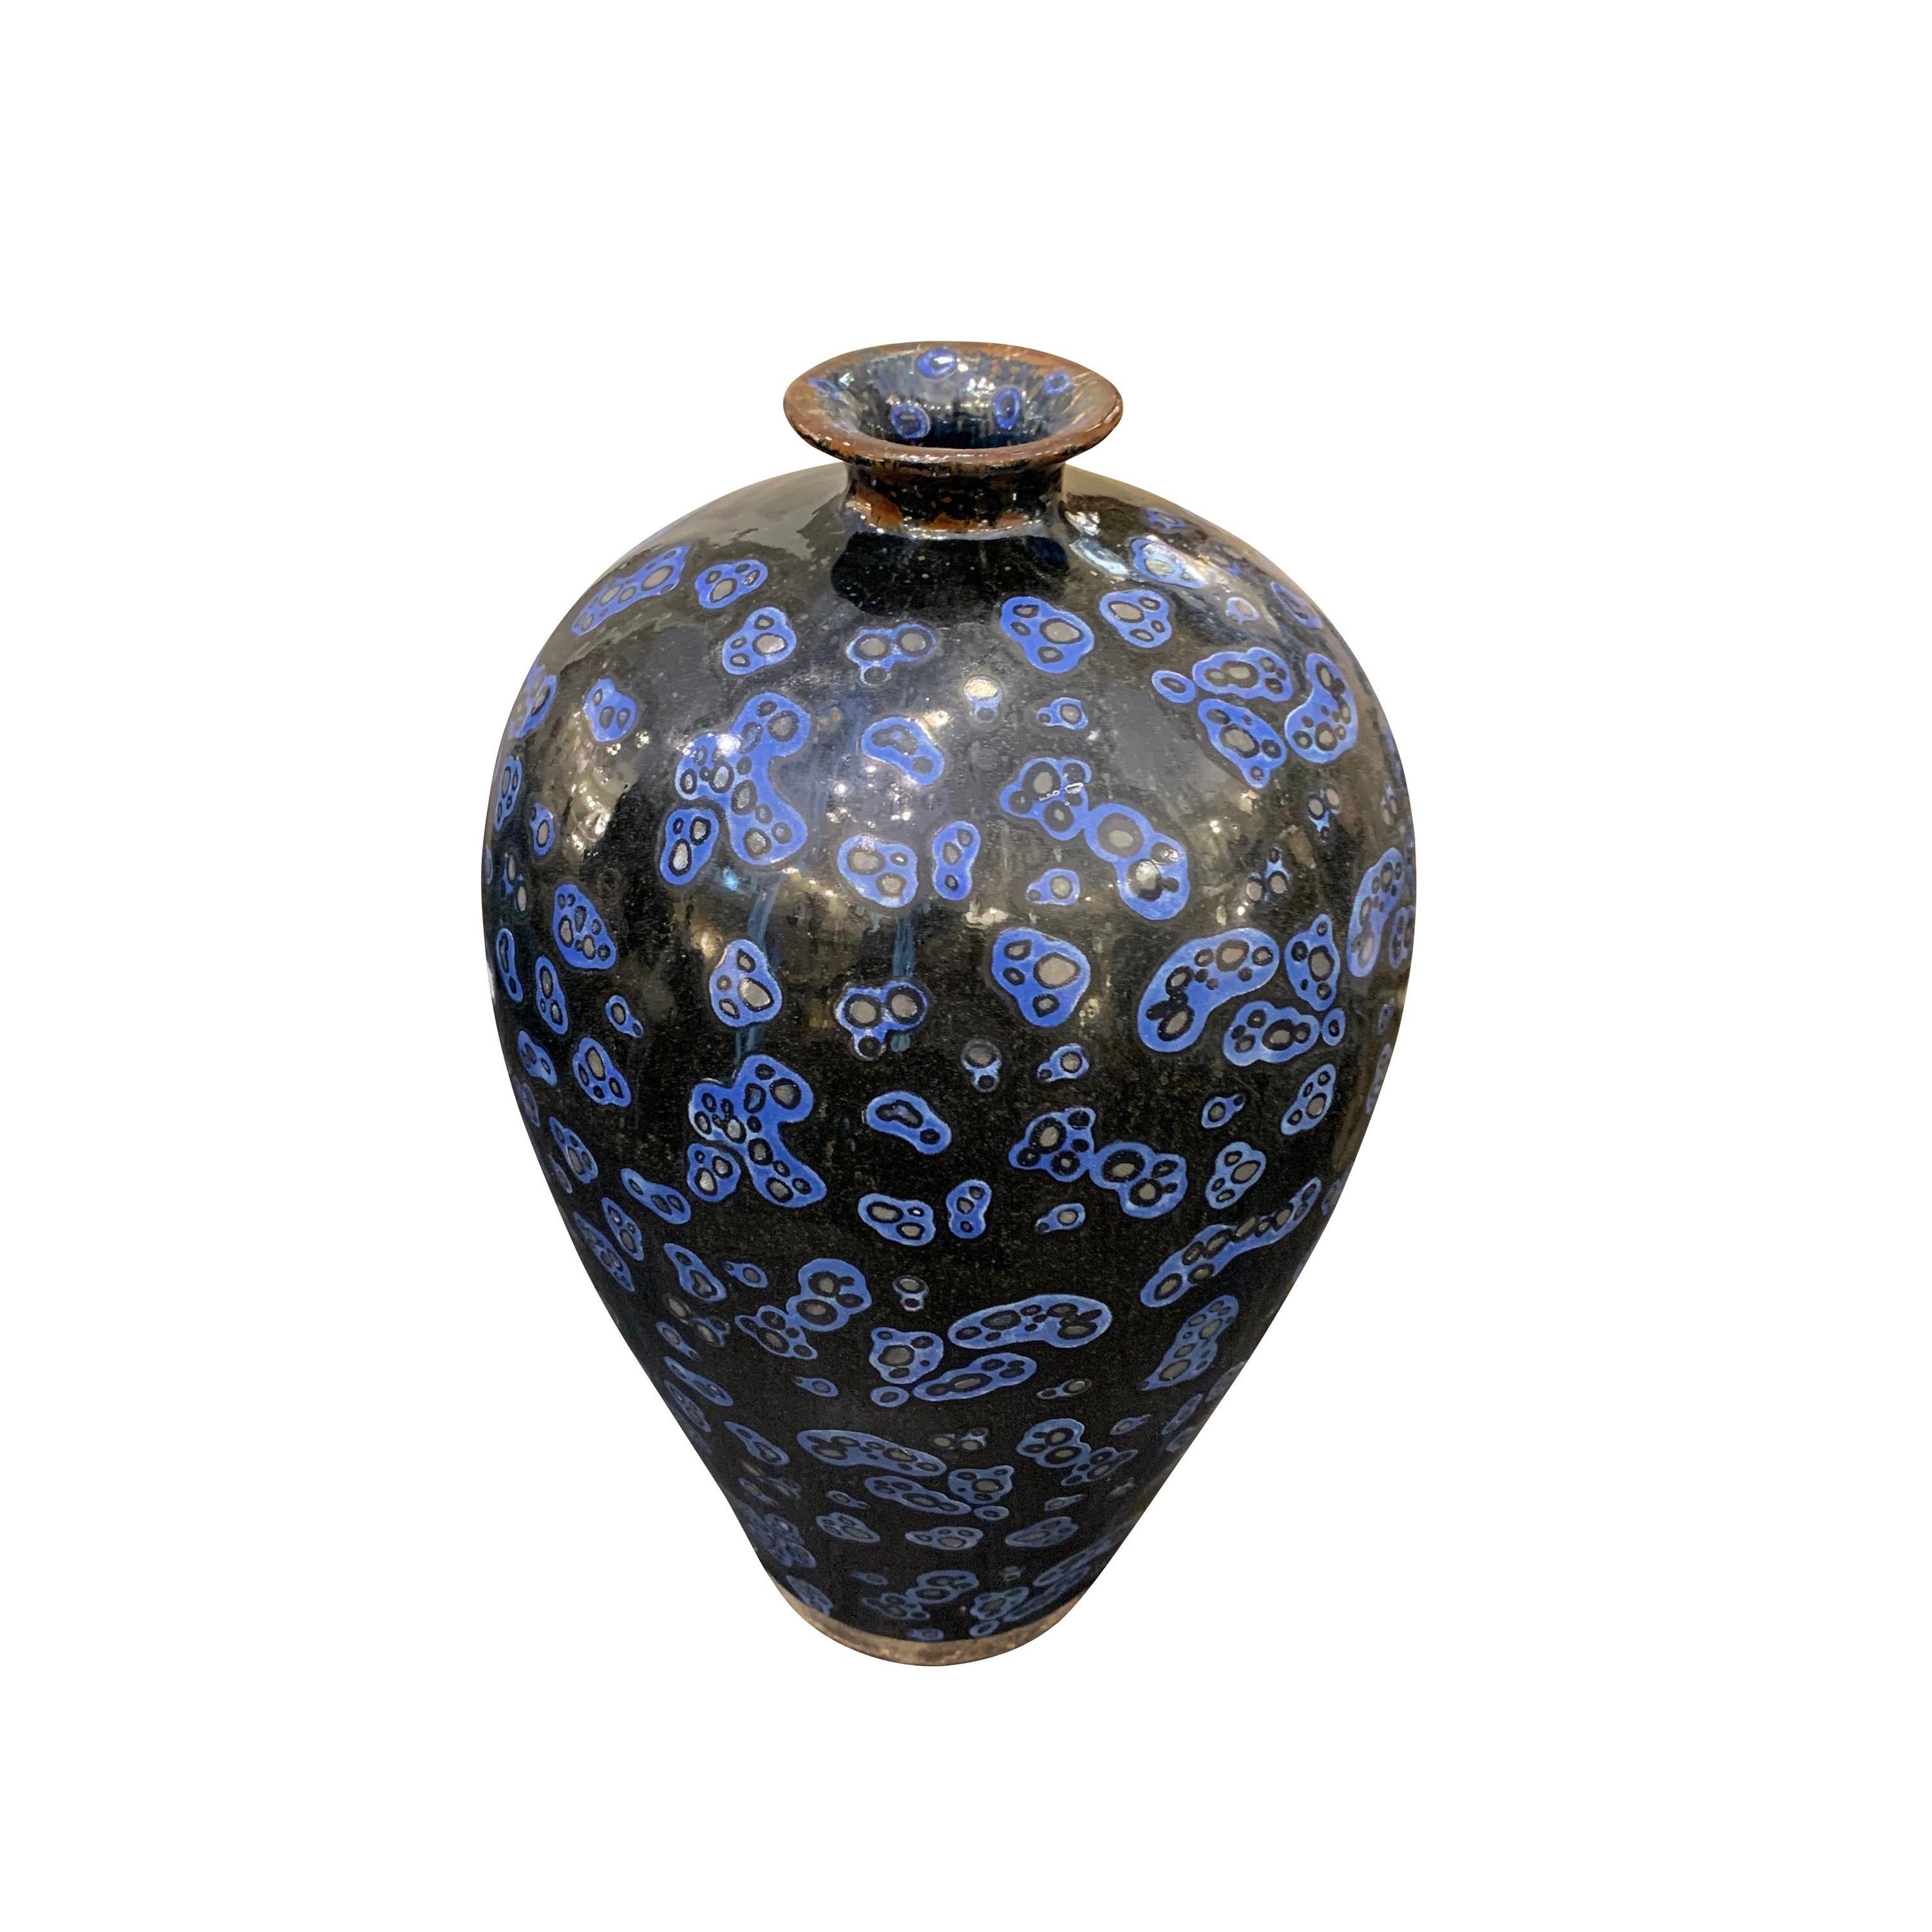 Royal Blue and Black Patterned Ceramic Vase, China, Contemporary